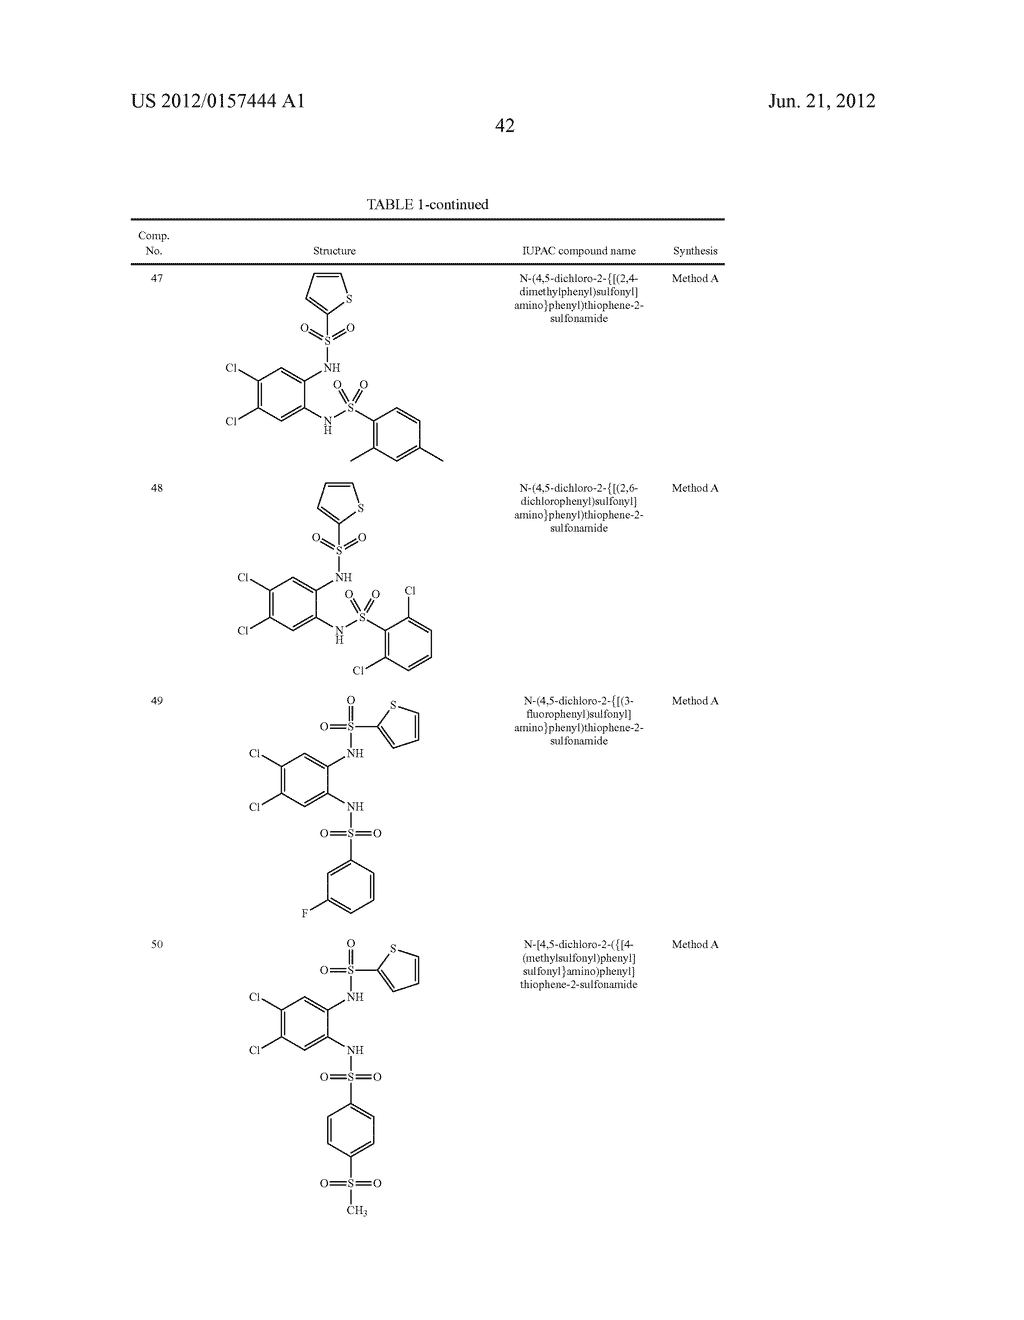 NOVEL 1,2- BIS-SULFONAMIDE DERIVATIVES AS CHEMOKINE RECEPTOR MODULATORS - diagram, schematic, and image 43